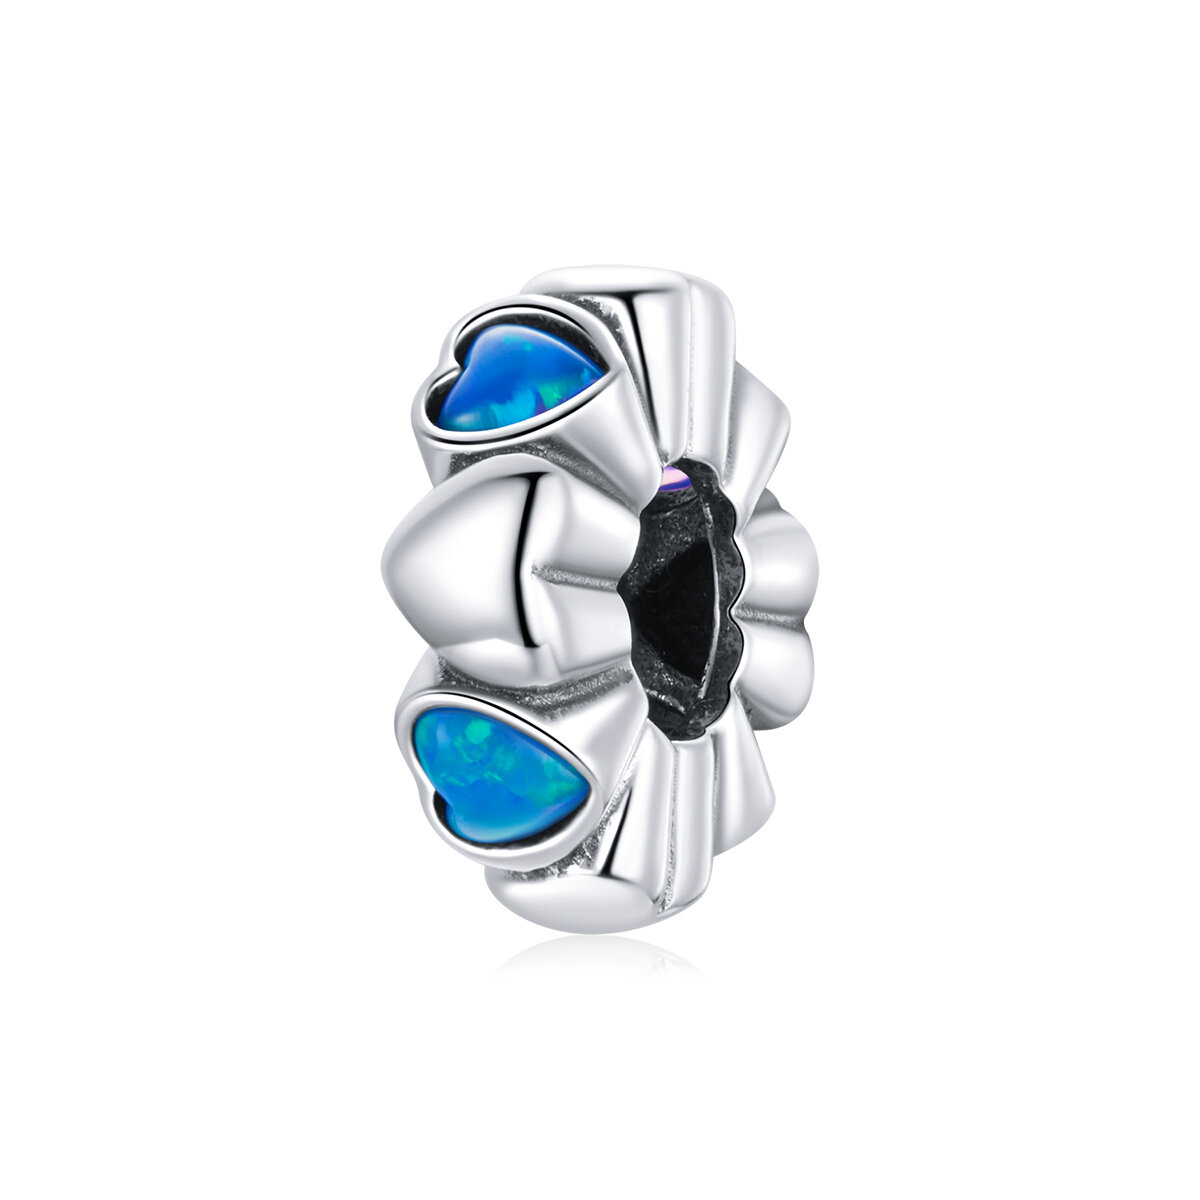 GemKing BSC435 Heart-shaped opal beads S925 Sterling Silver Charm